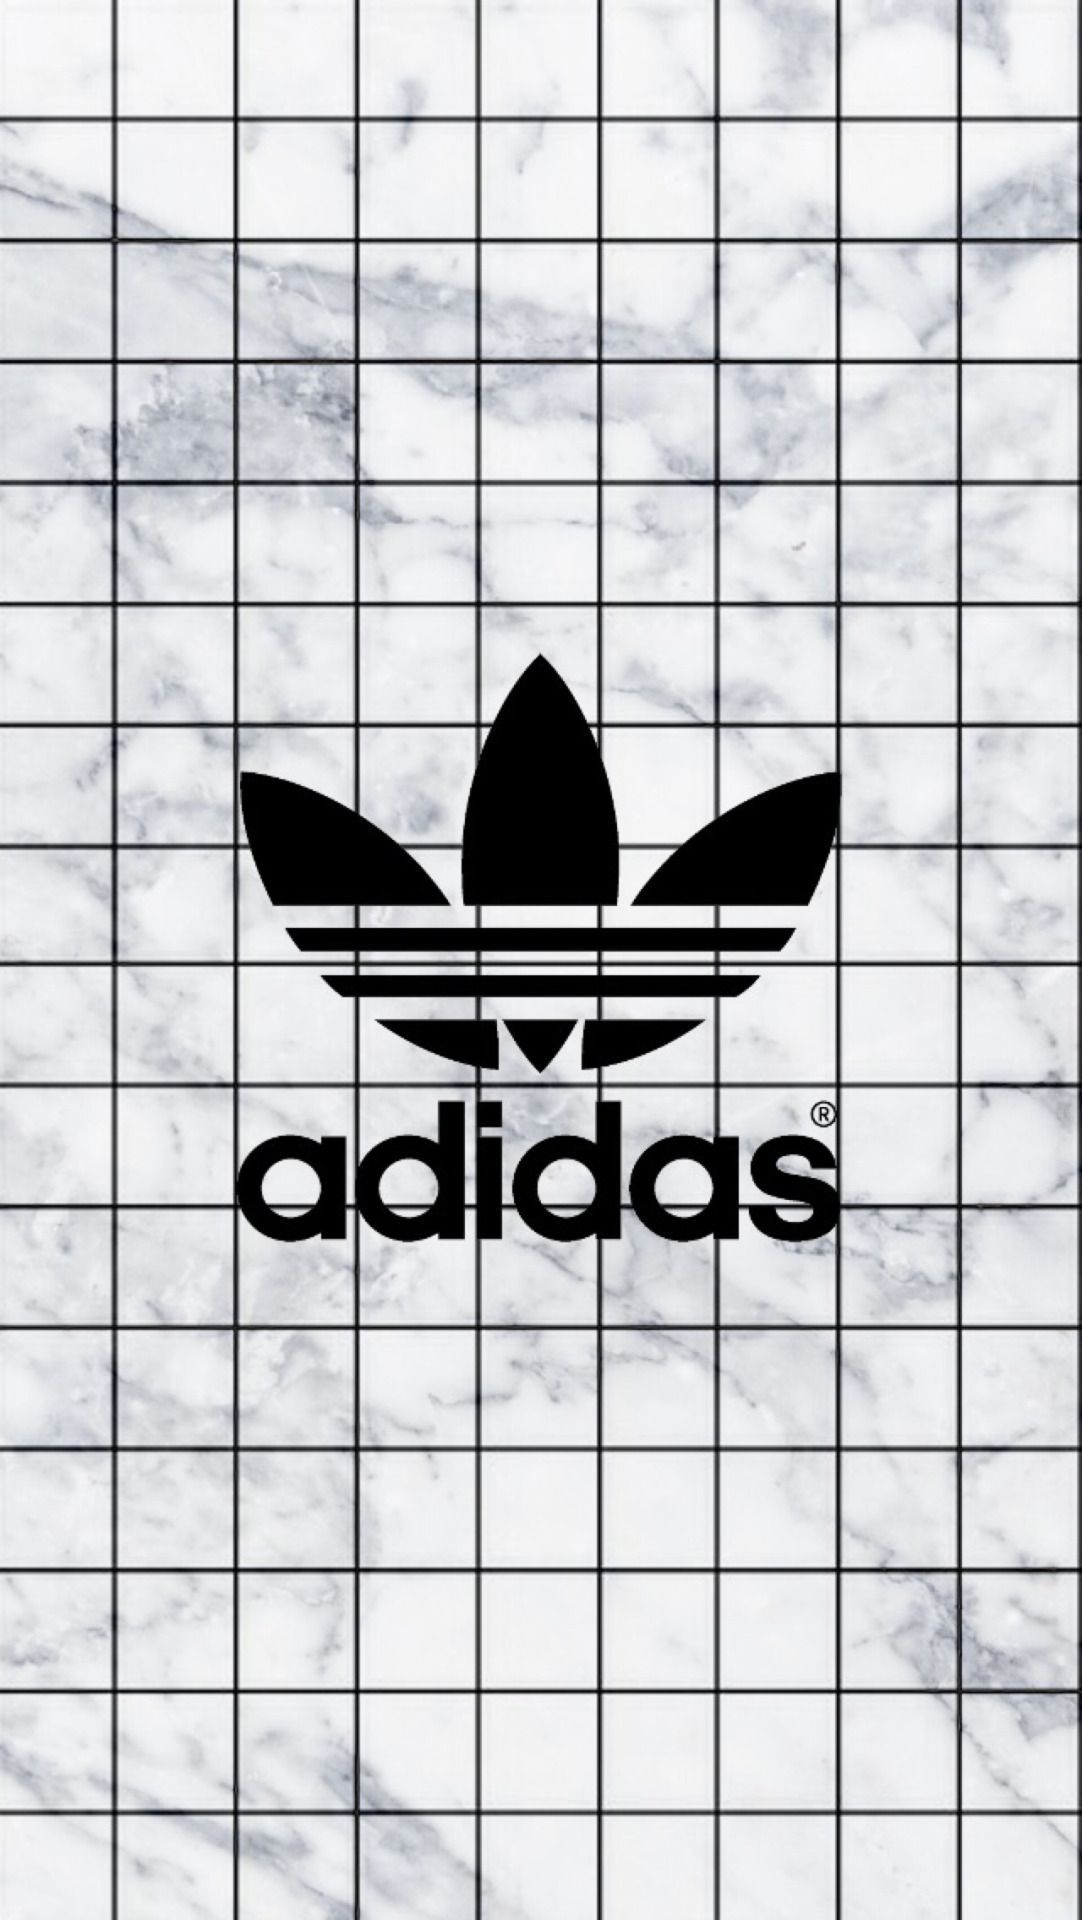 adidas wallpaper. Adidas wallpaper, Adidas wallpaper iphone, Adidas logo wallpaper